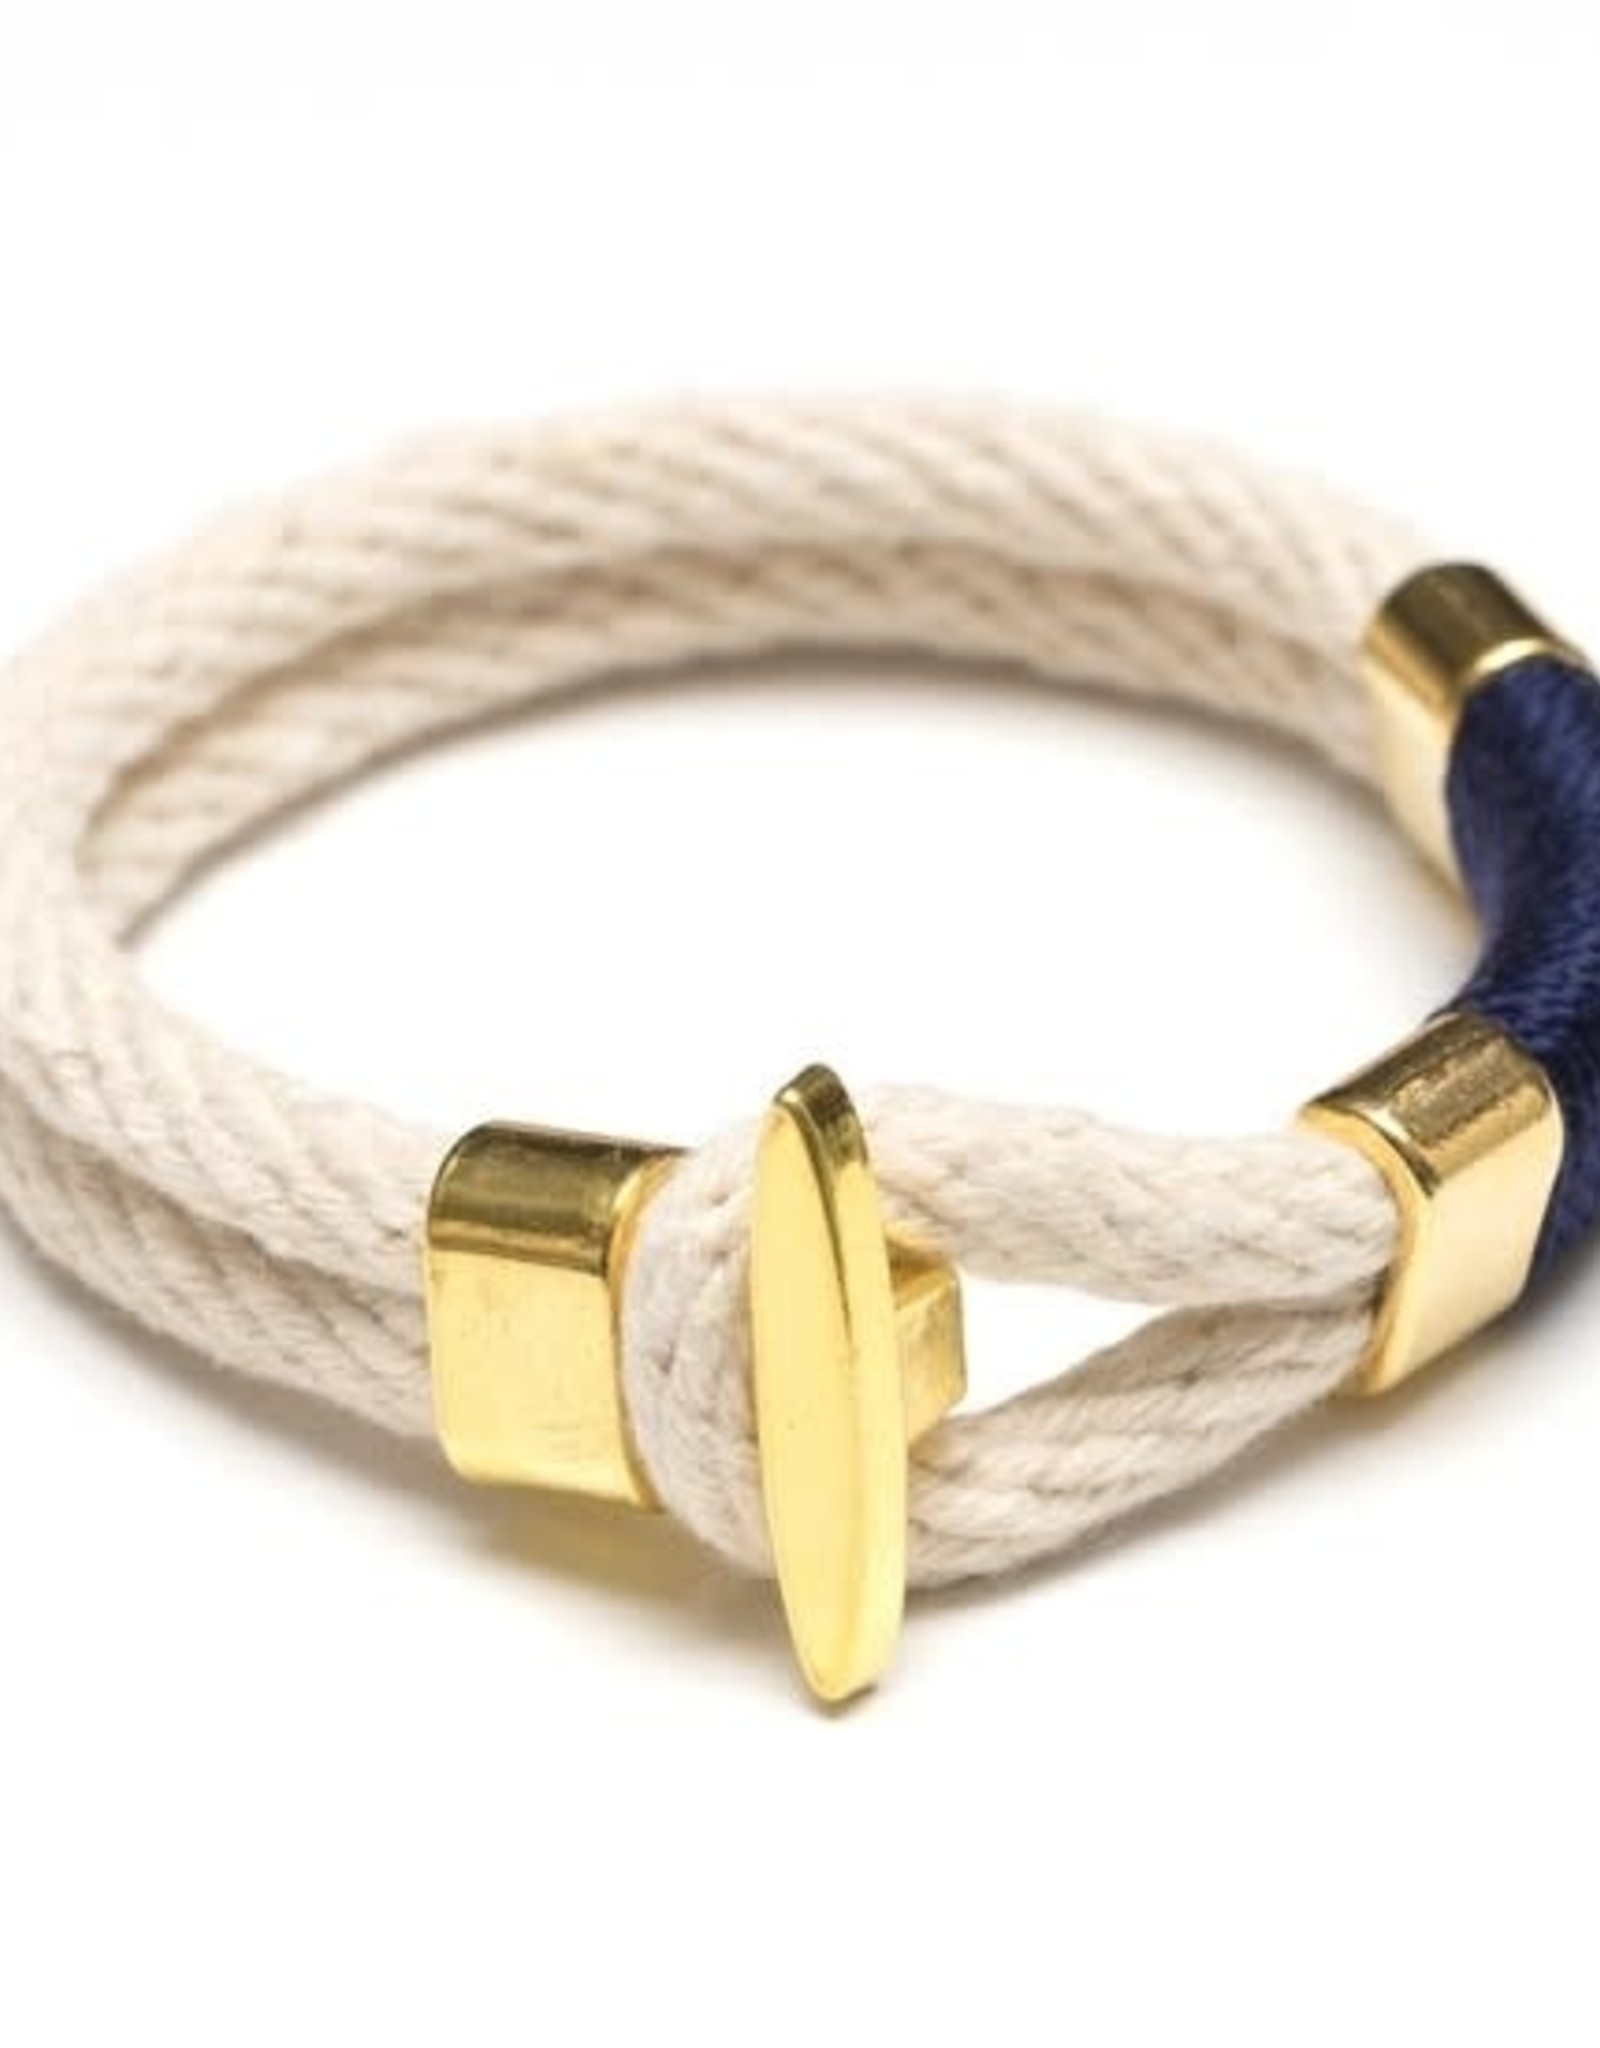 Allison Cole Jewelry Cambridge Bracelet - Ivory/Navy/Gold XS